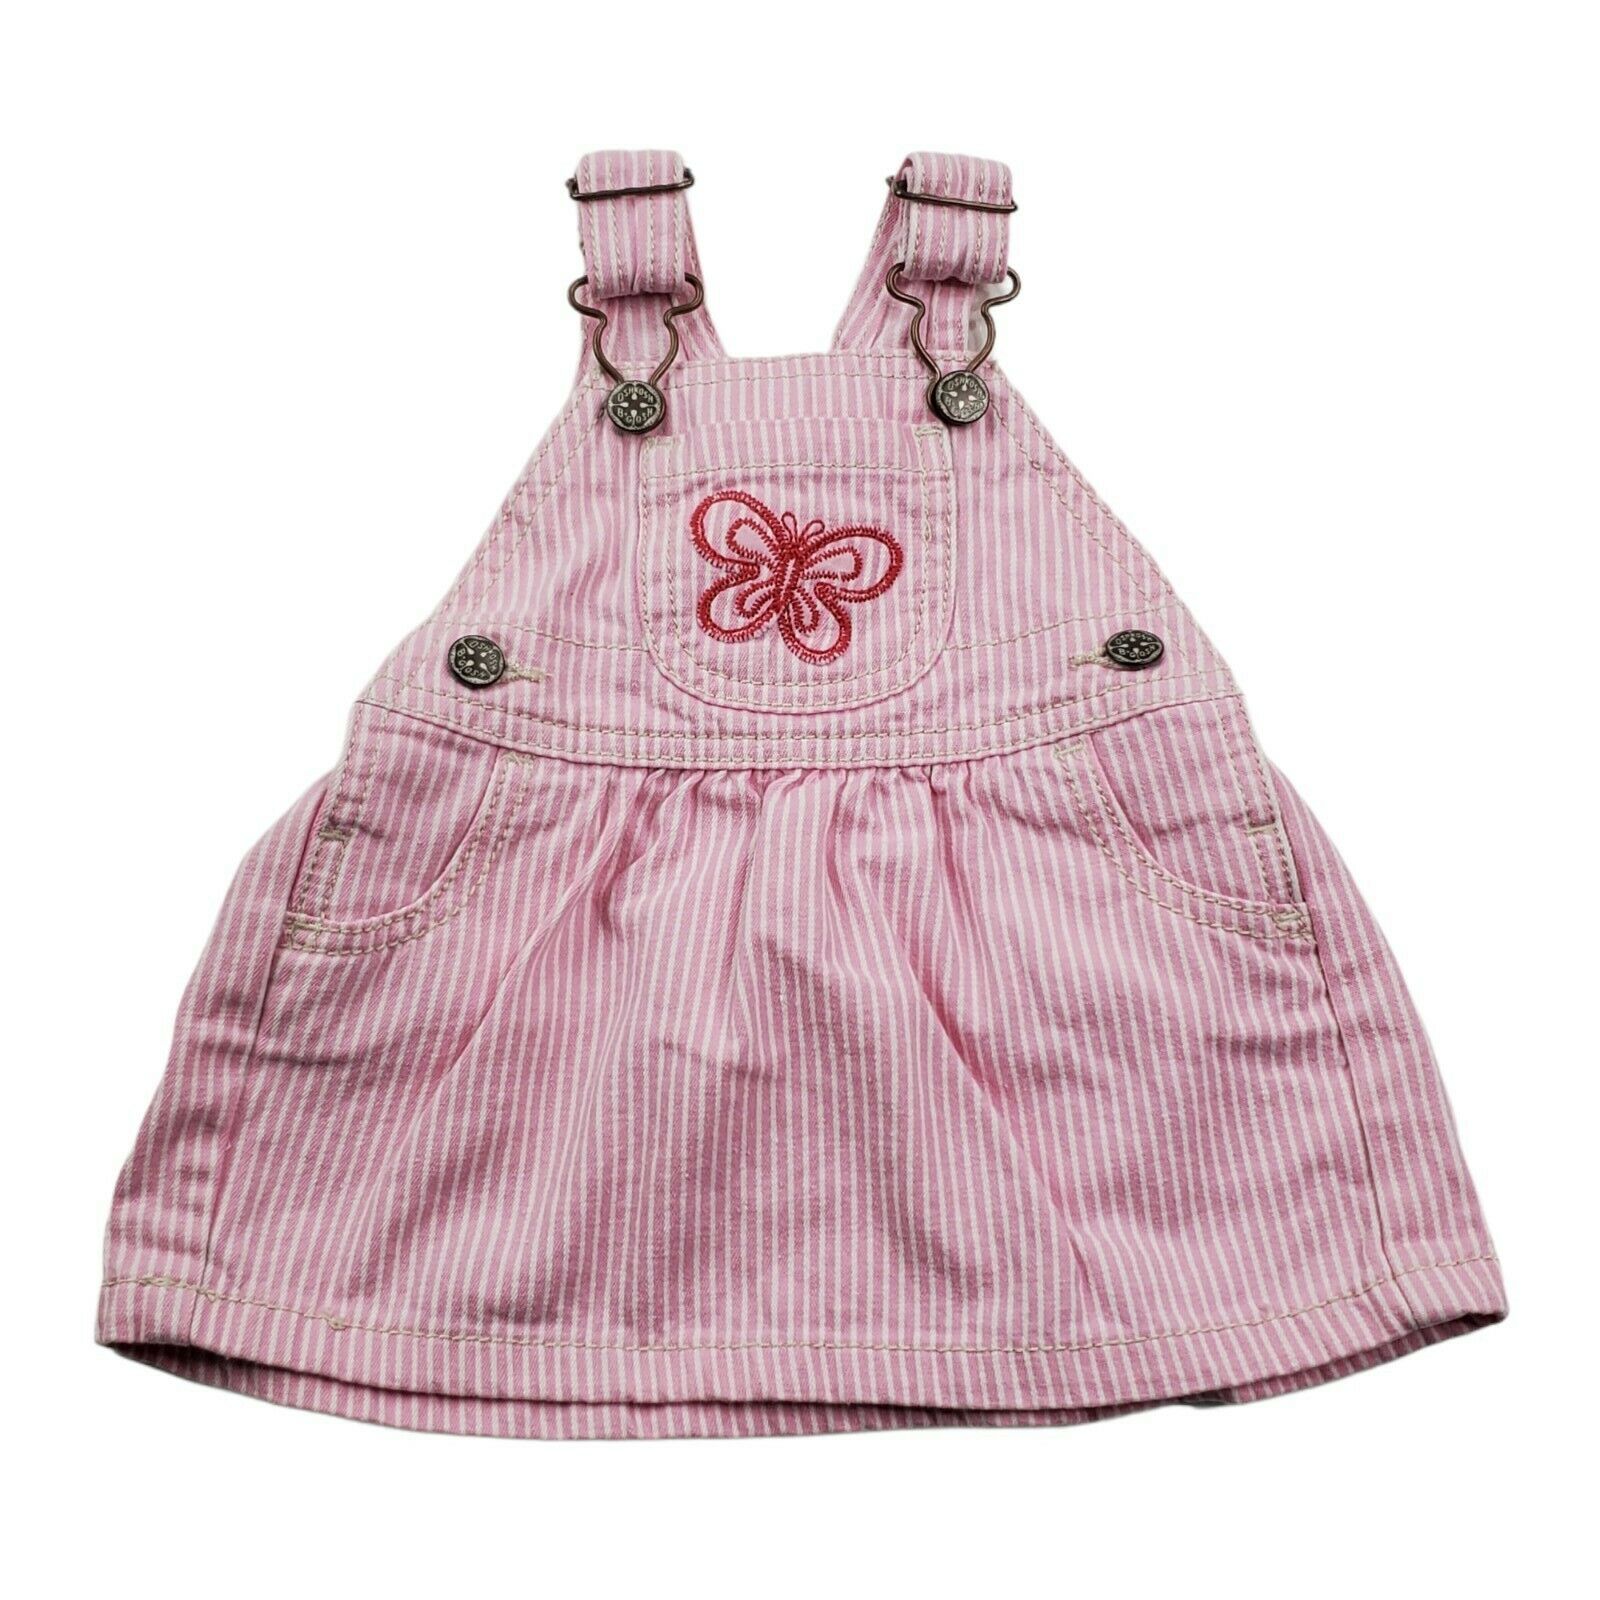 Oshkosh B'gosh Vestbak Overalls Dress Girl 3 Months Pink White Stripe Butterfly